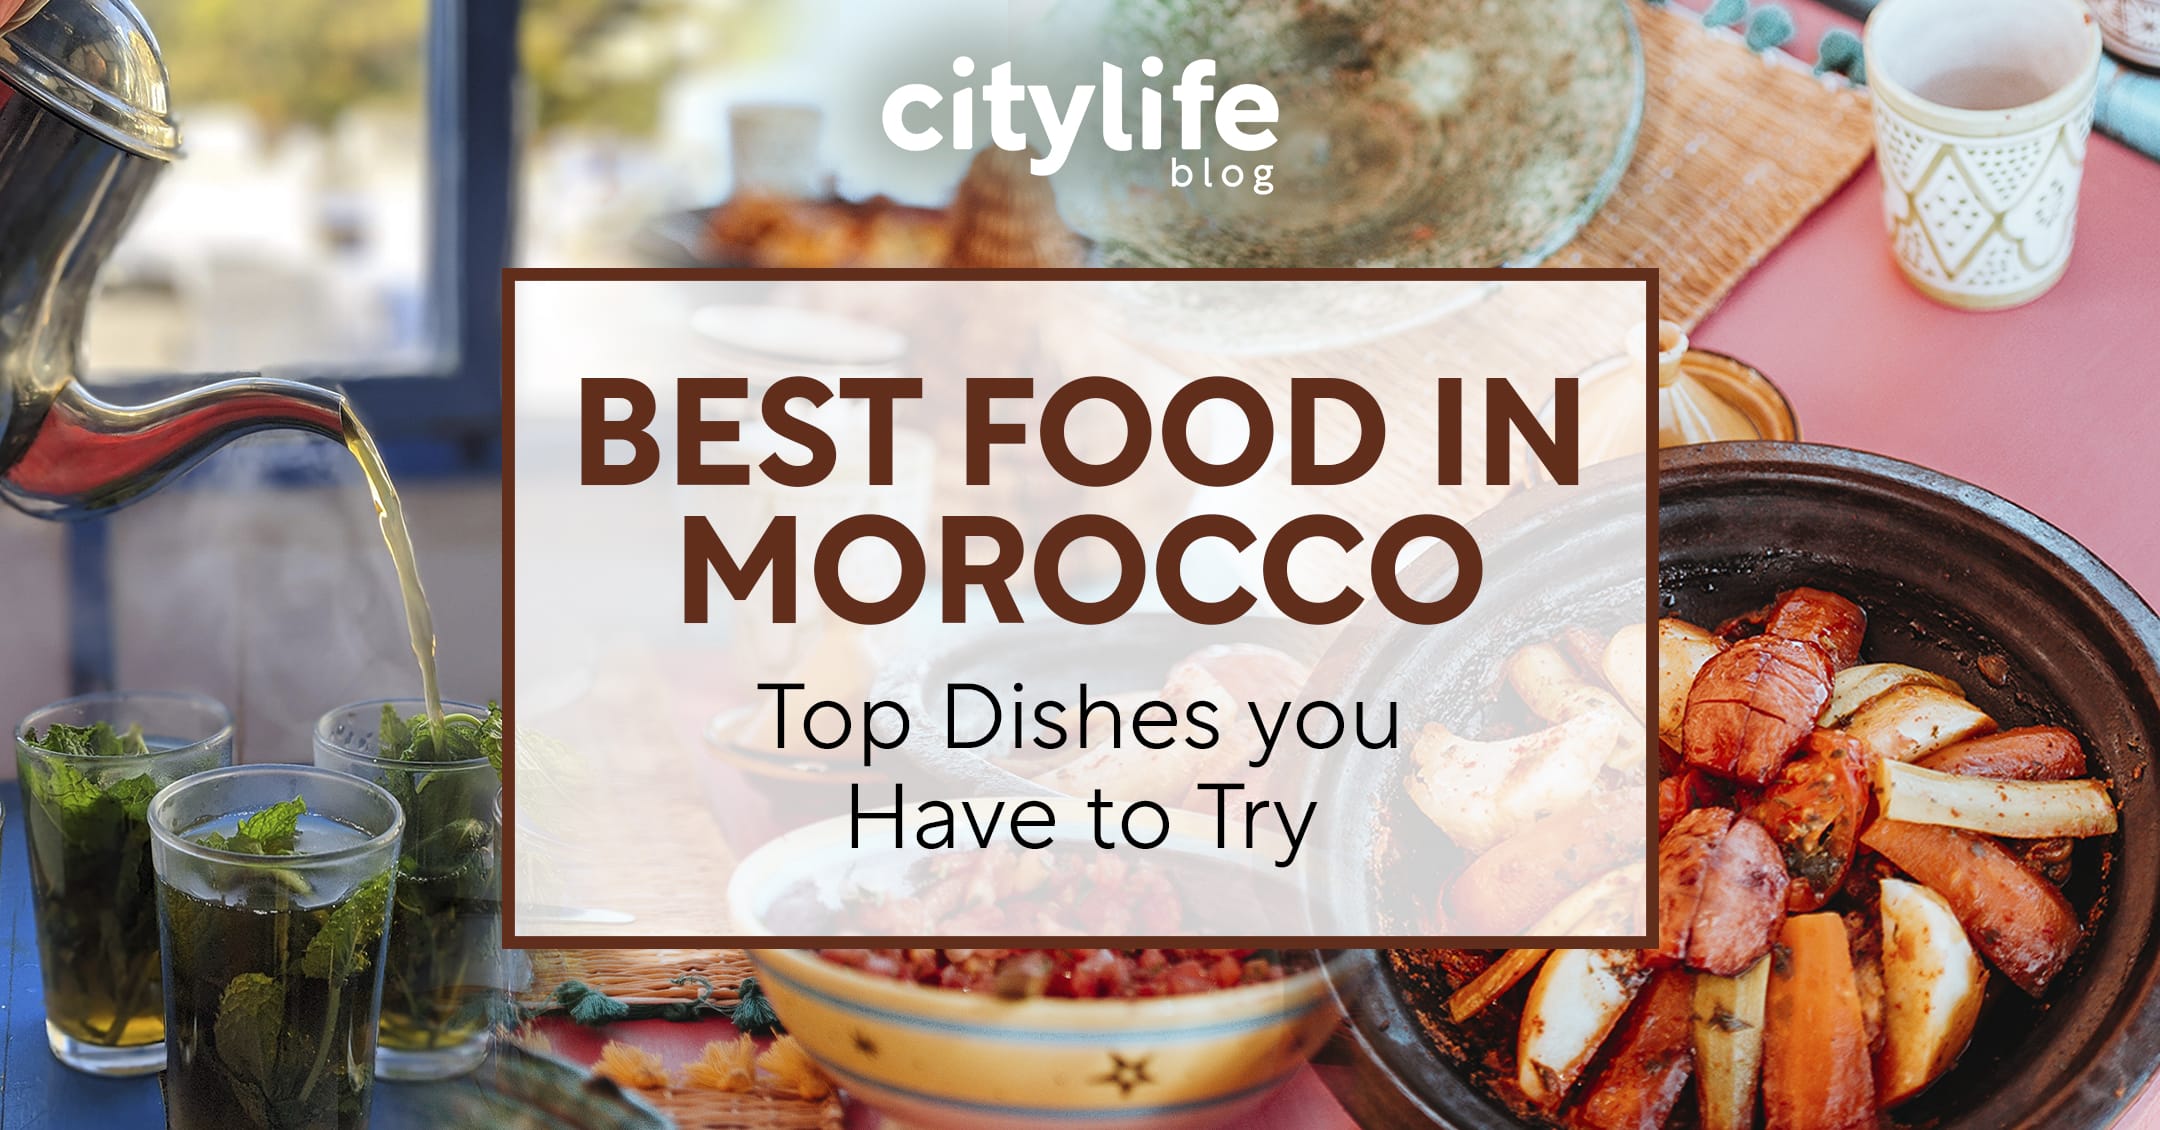 https://www.citylifemadrid.com/wp-content/uploads/2020/02/featured-image-best-food-in-morocco-citylife-madrid.jpg